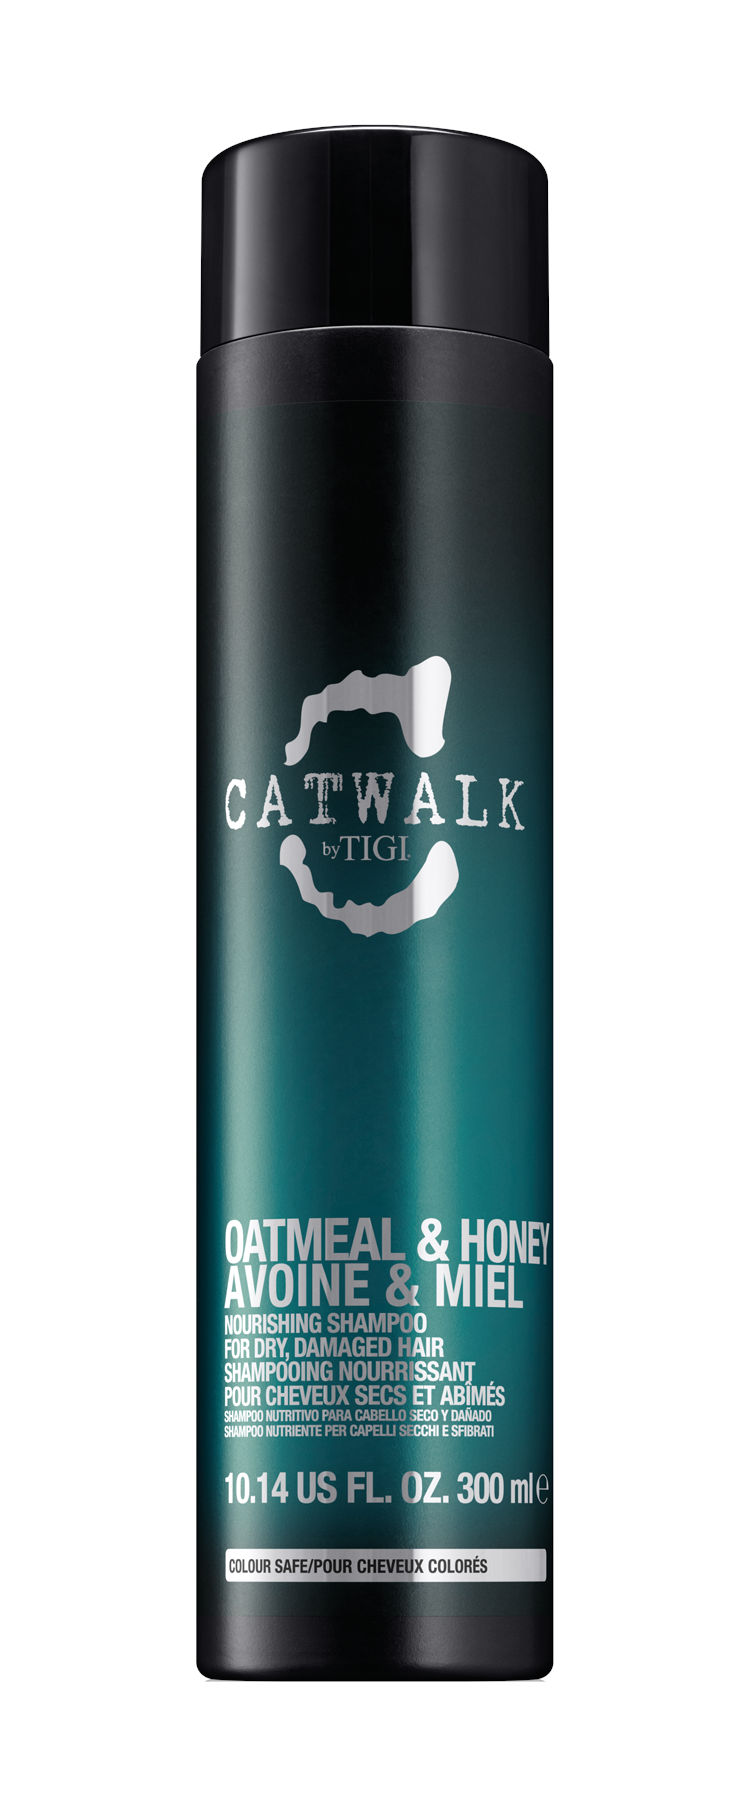 Tigi catwalk oatmeal and honey шампунь восстанавливающий для волос 300мл